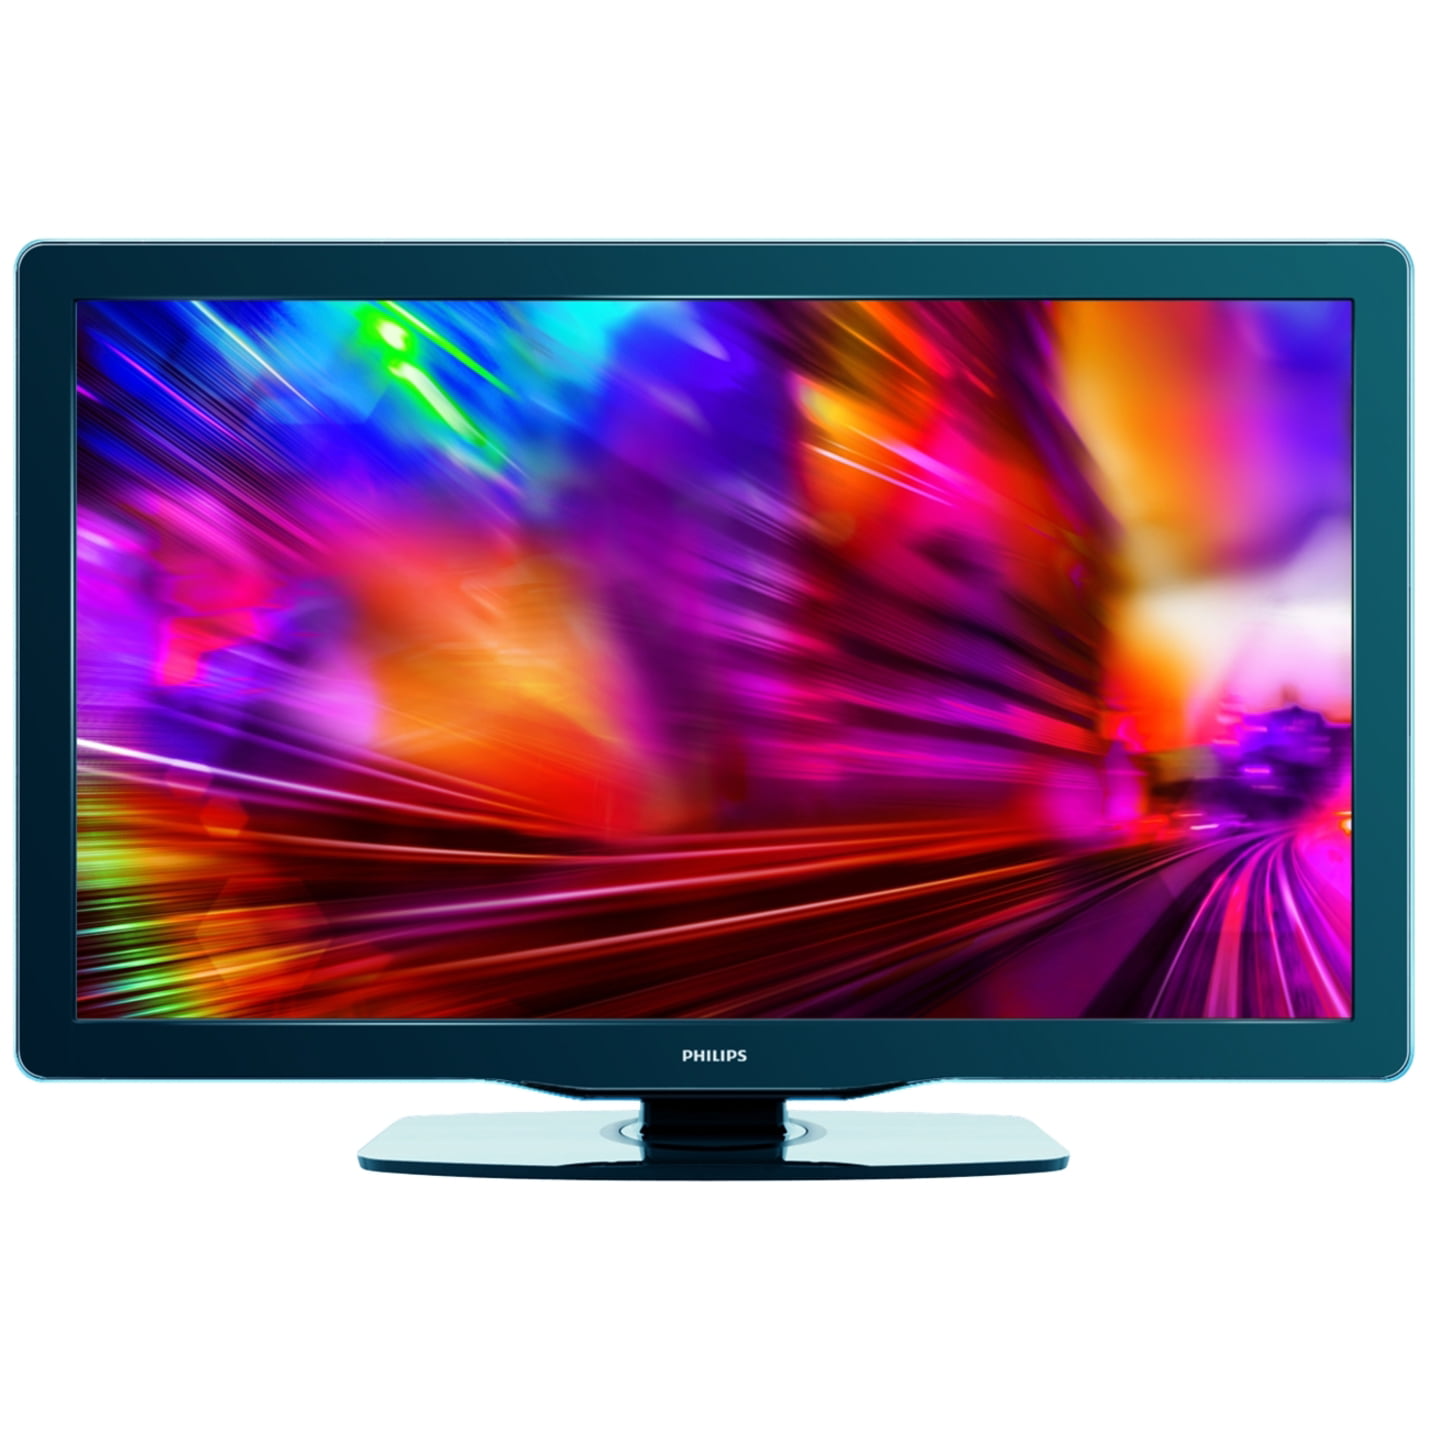 spansk gardin Rummet Philips 40" Class HDTV (1080p) LCD TV (40PFL3705D) - Walmart.com